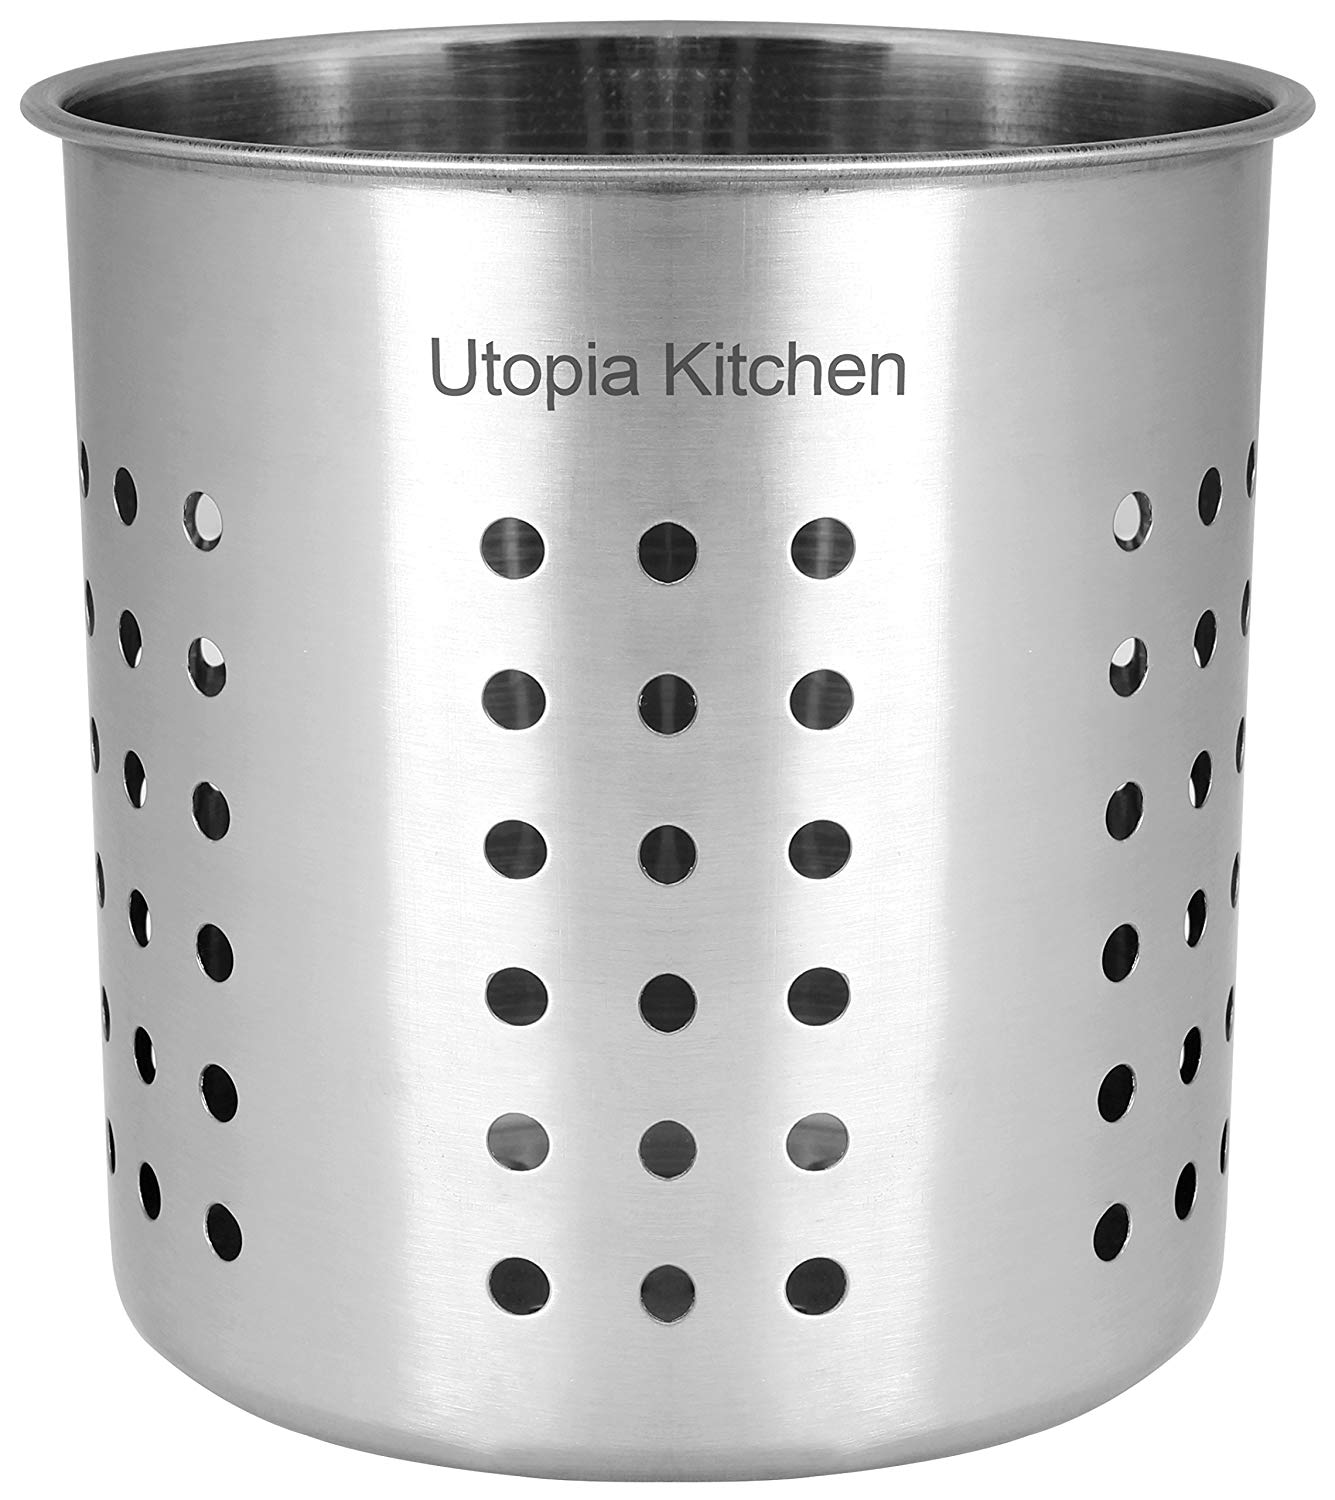 https://www.momjunction.com/wp-content/uploads/product-images/utopia-kitchen-stainless-steel-cooking-utensil-holder_afl1146.jpg